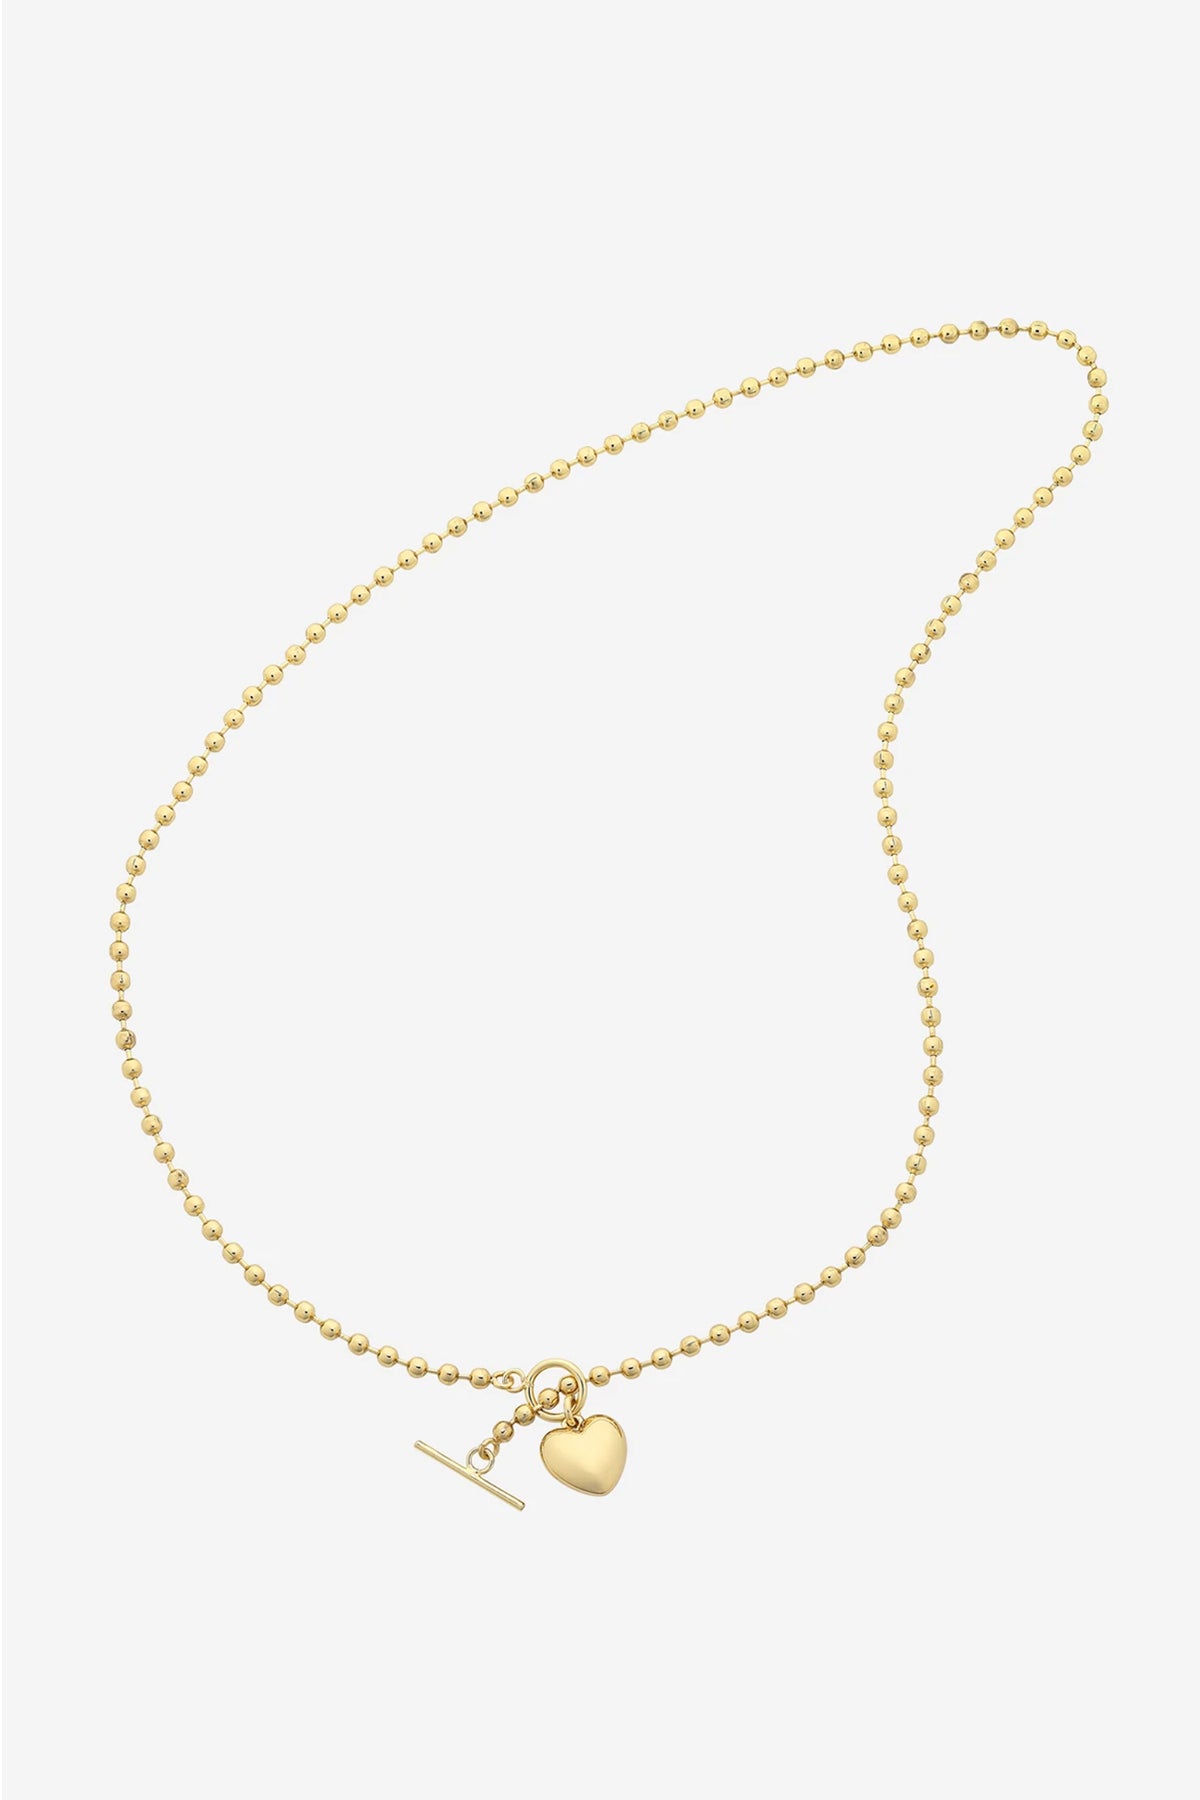 Cosette Gold Necklace